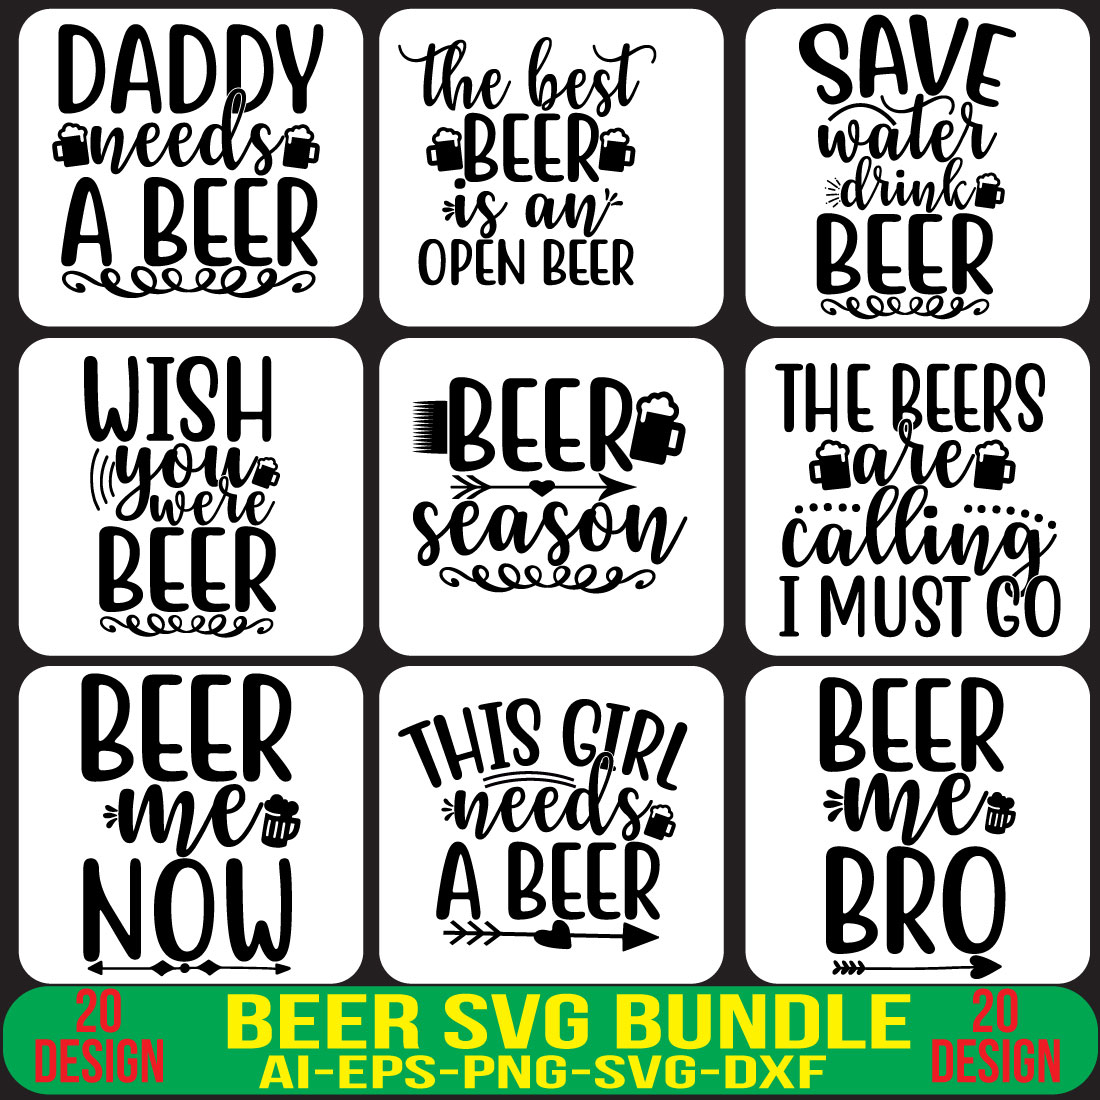 Beer SVG Bundle preview image.